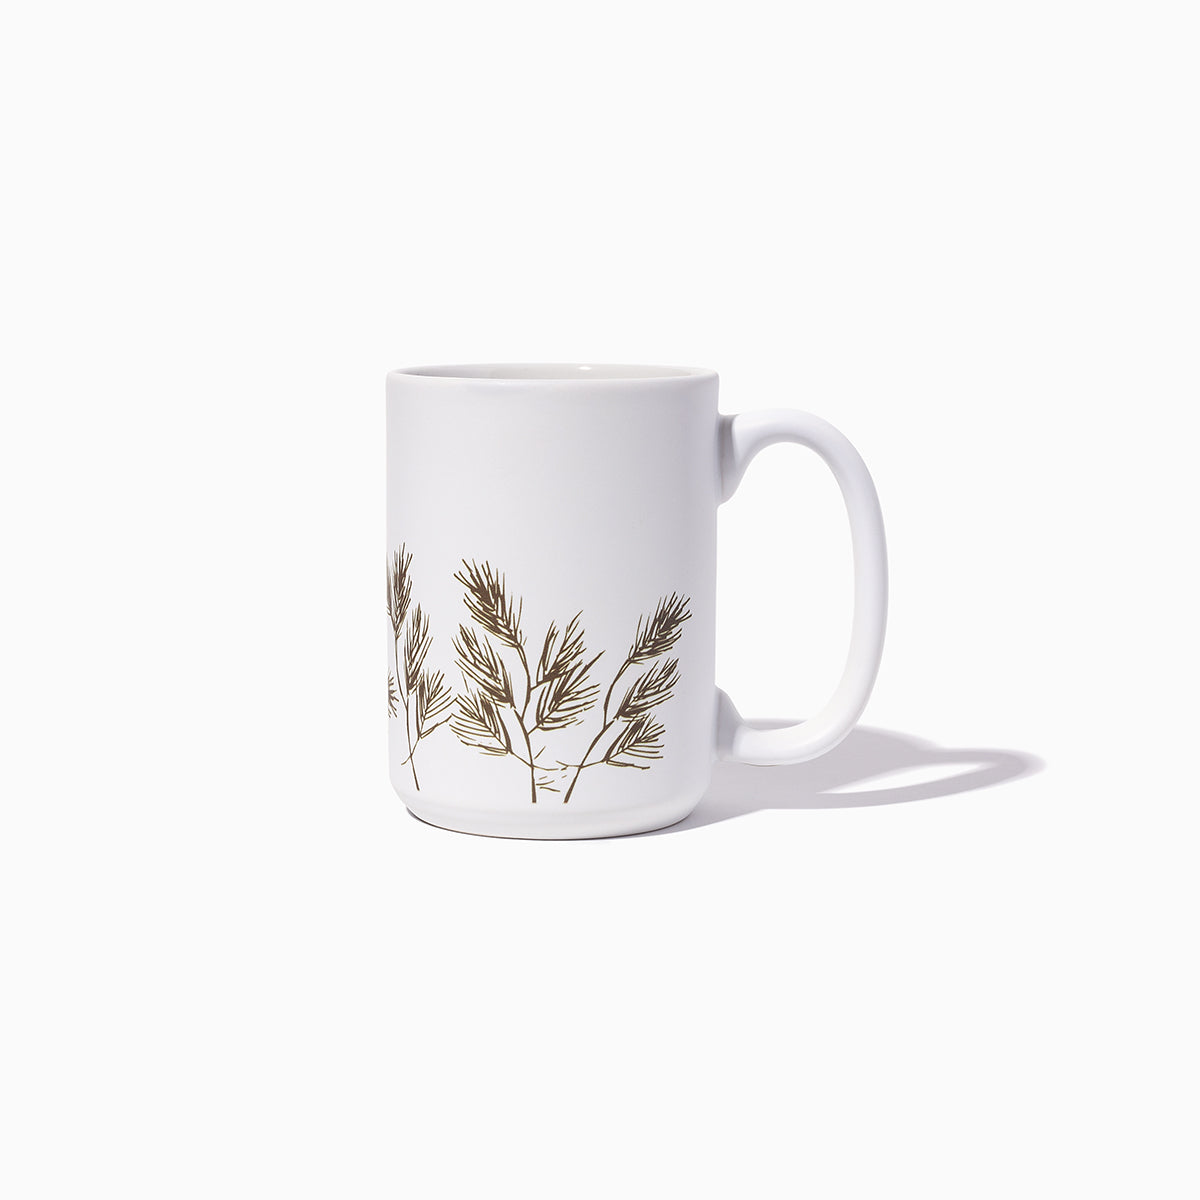 Winter Pine Ceramic Mug | Product Image | Uncommon James Home